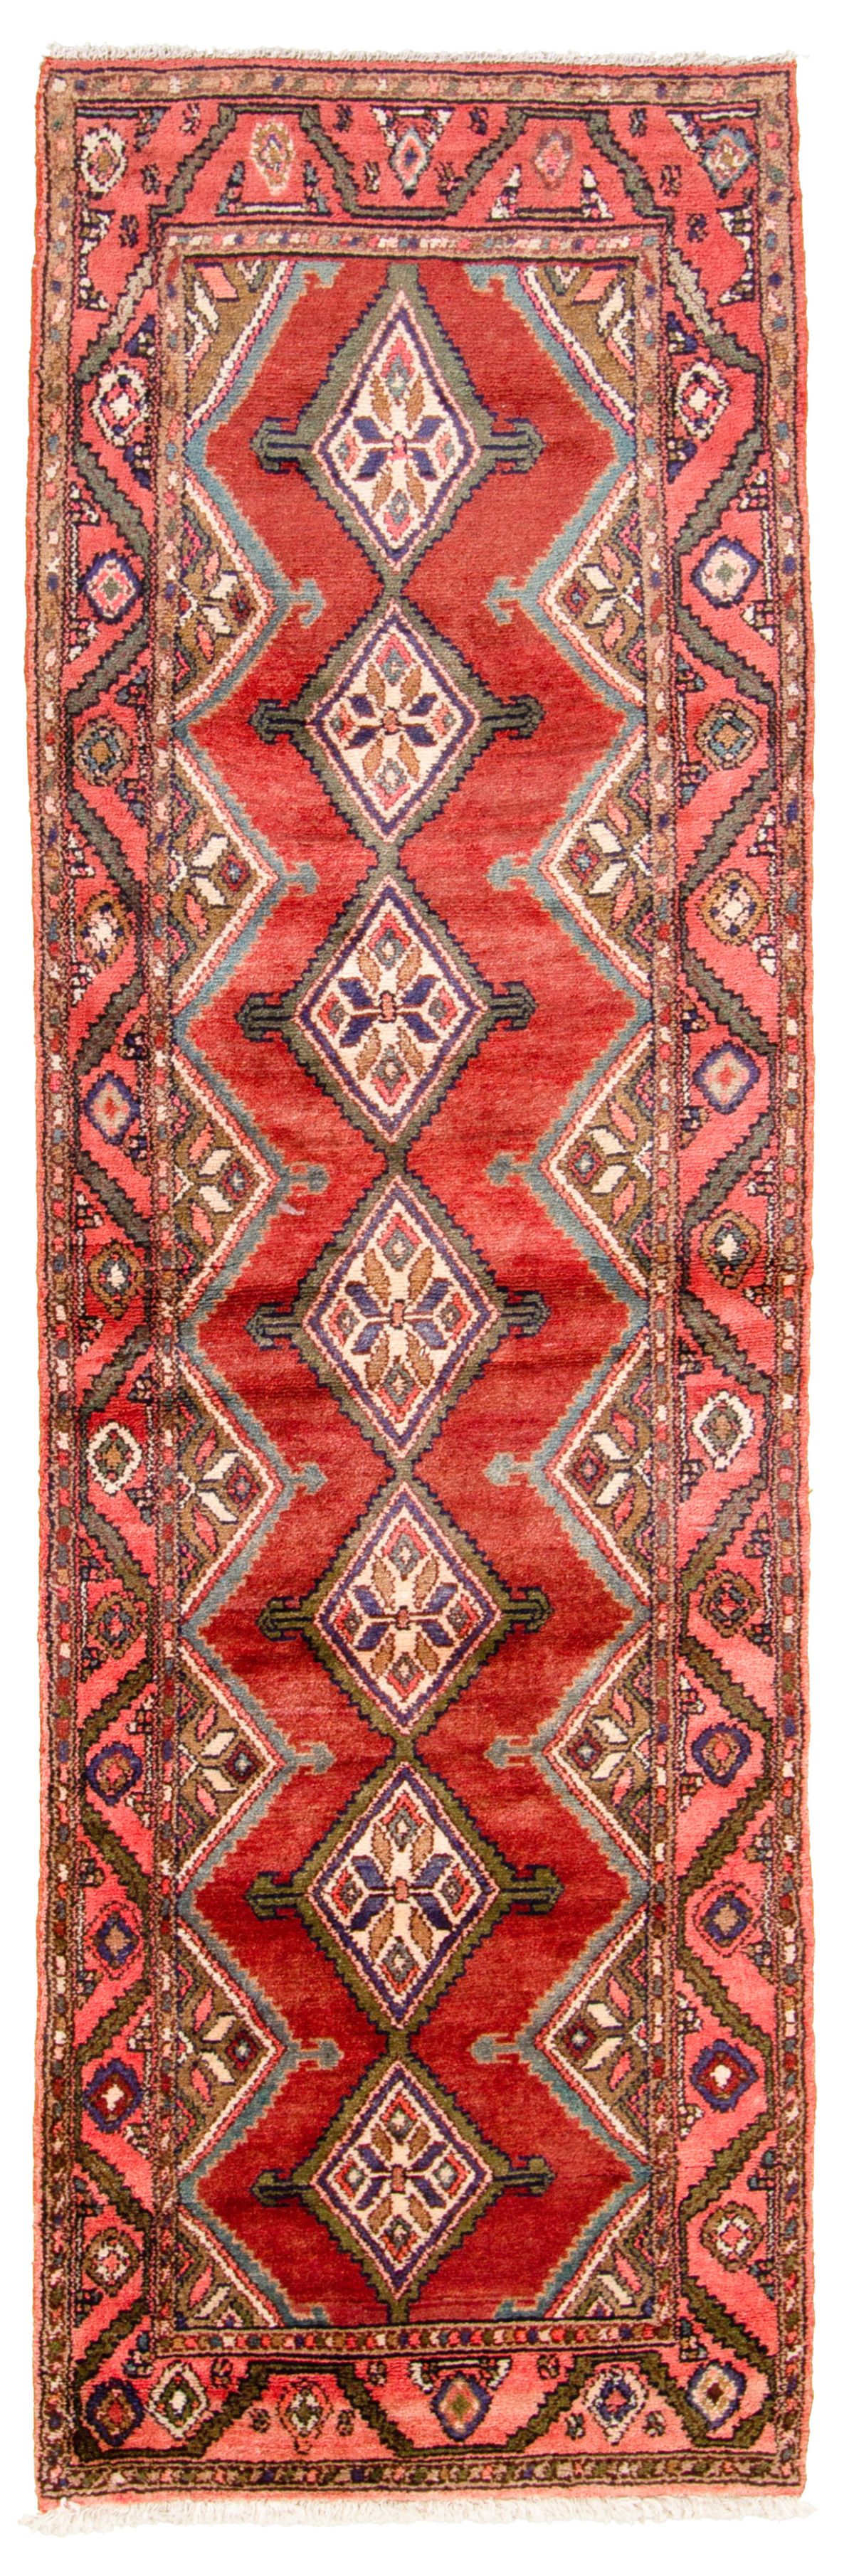 Hand-knotted Hamadan  Wool Rug 2'9" x 9'4"  Size: 2'9" x 9'4"  